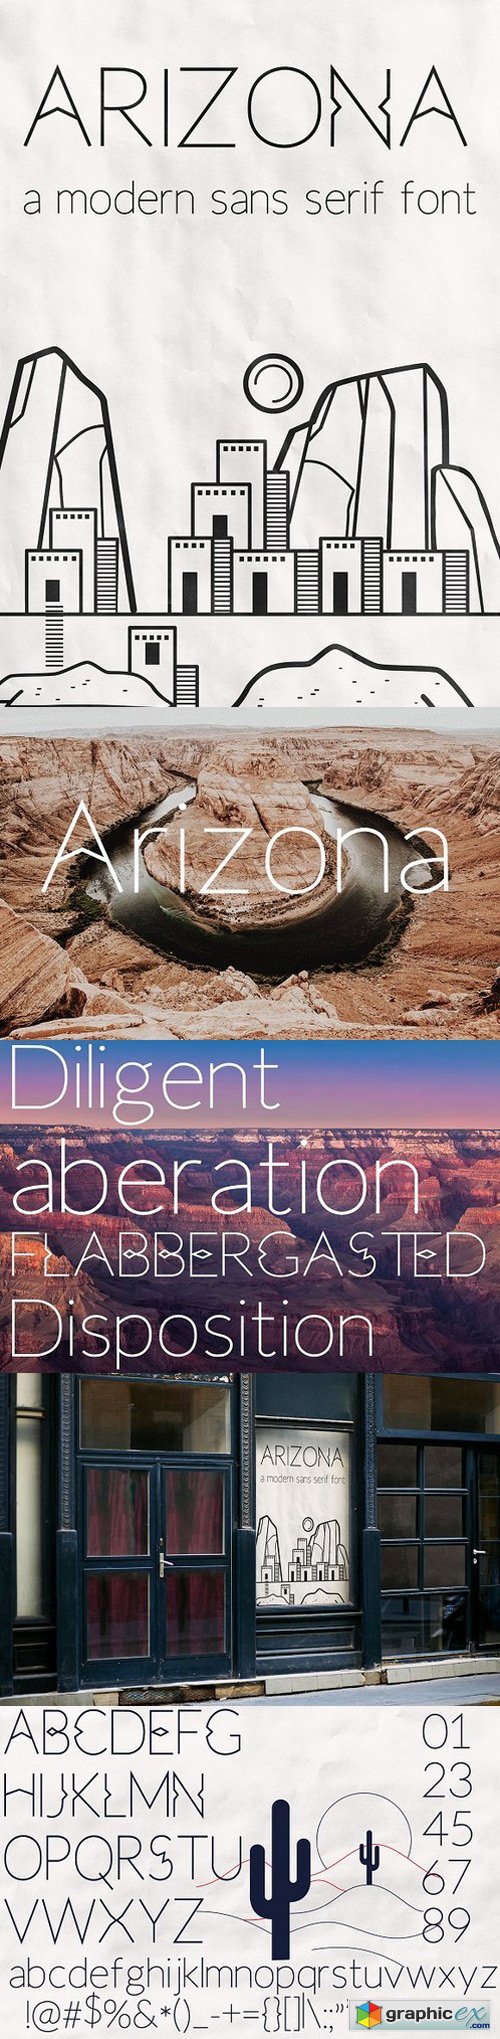 Arizona, a modern sans serif